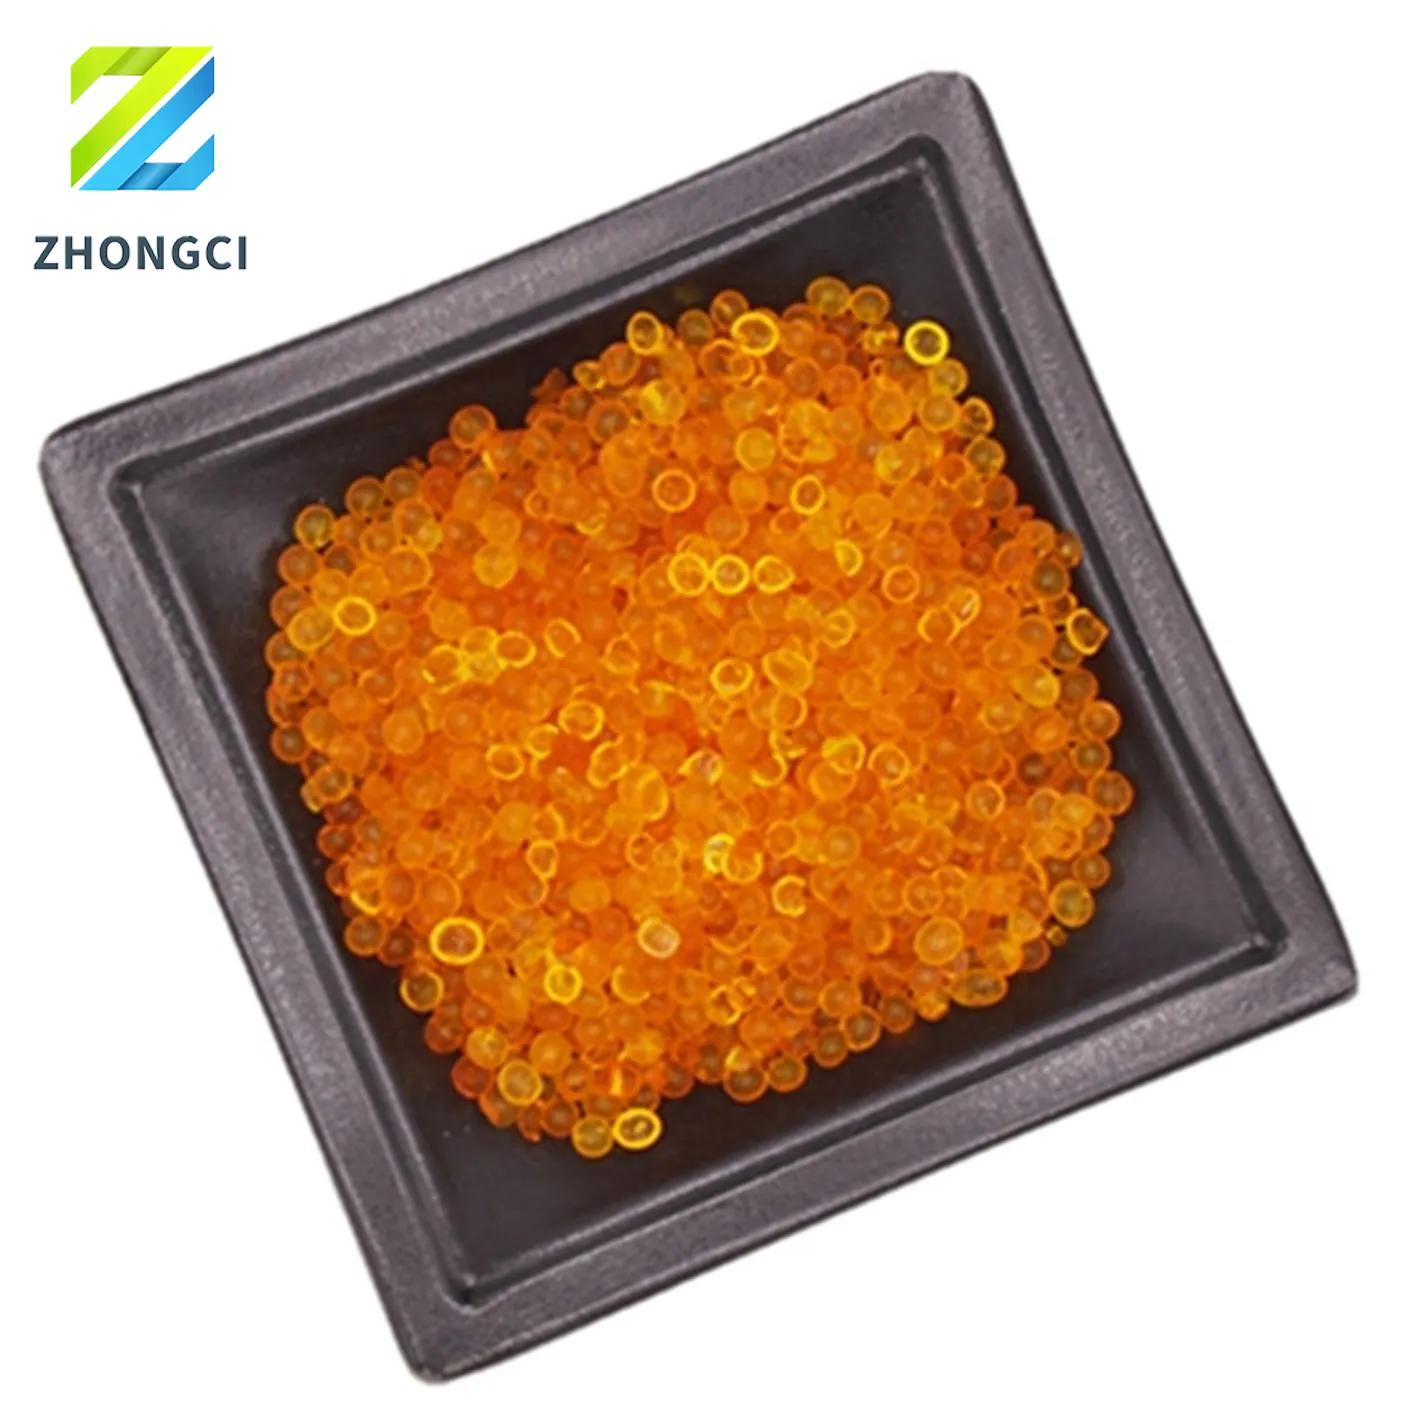 Zhongci silica gel type A orange color indicator desiccant 2-5mm absorbing moisture industrial white blue orange silica gel